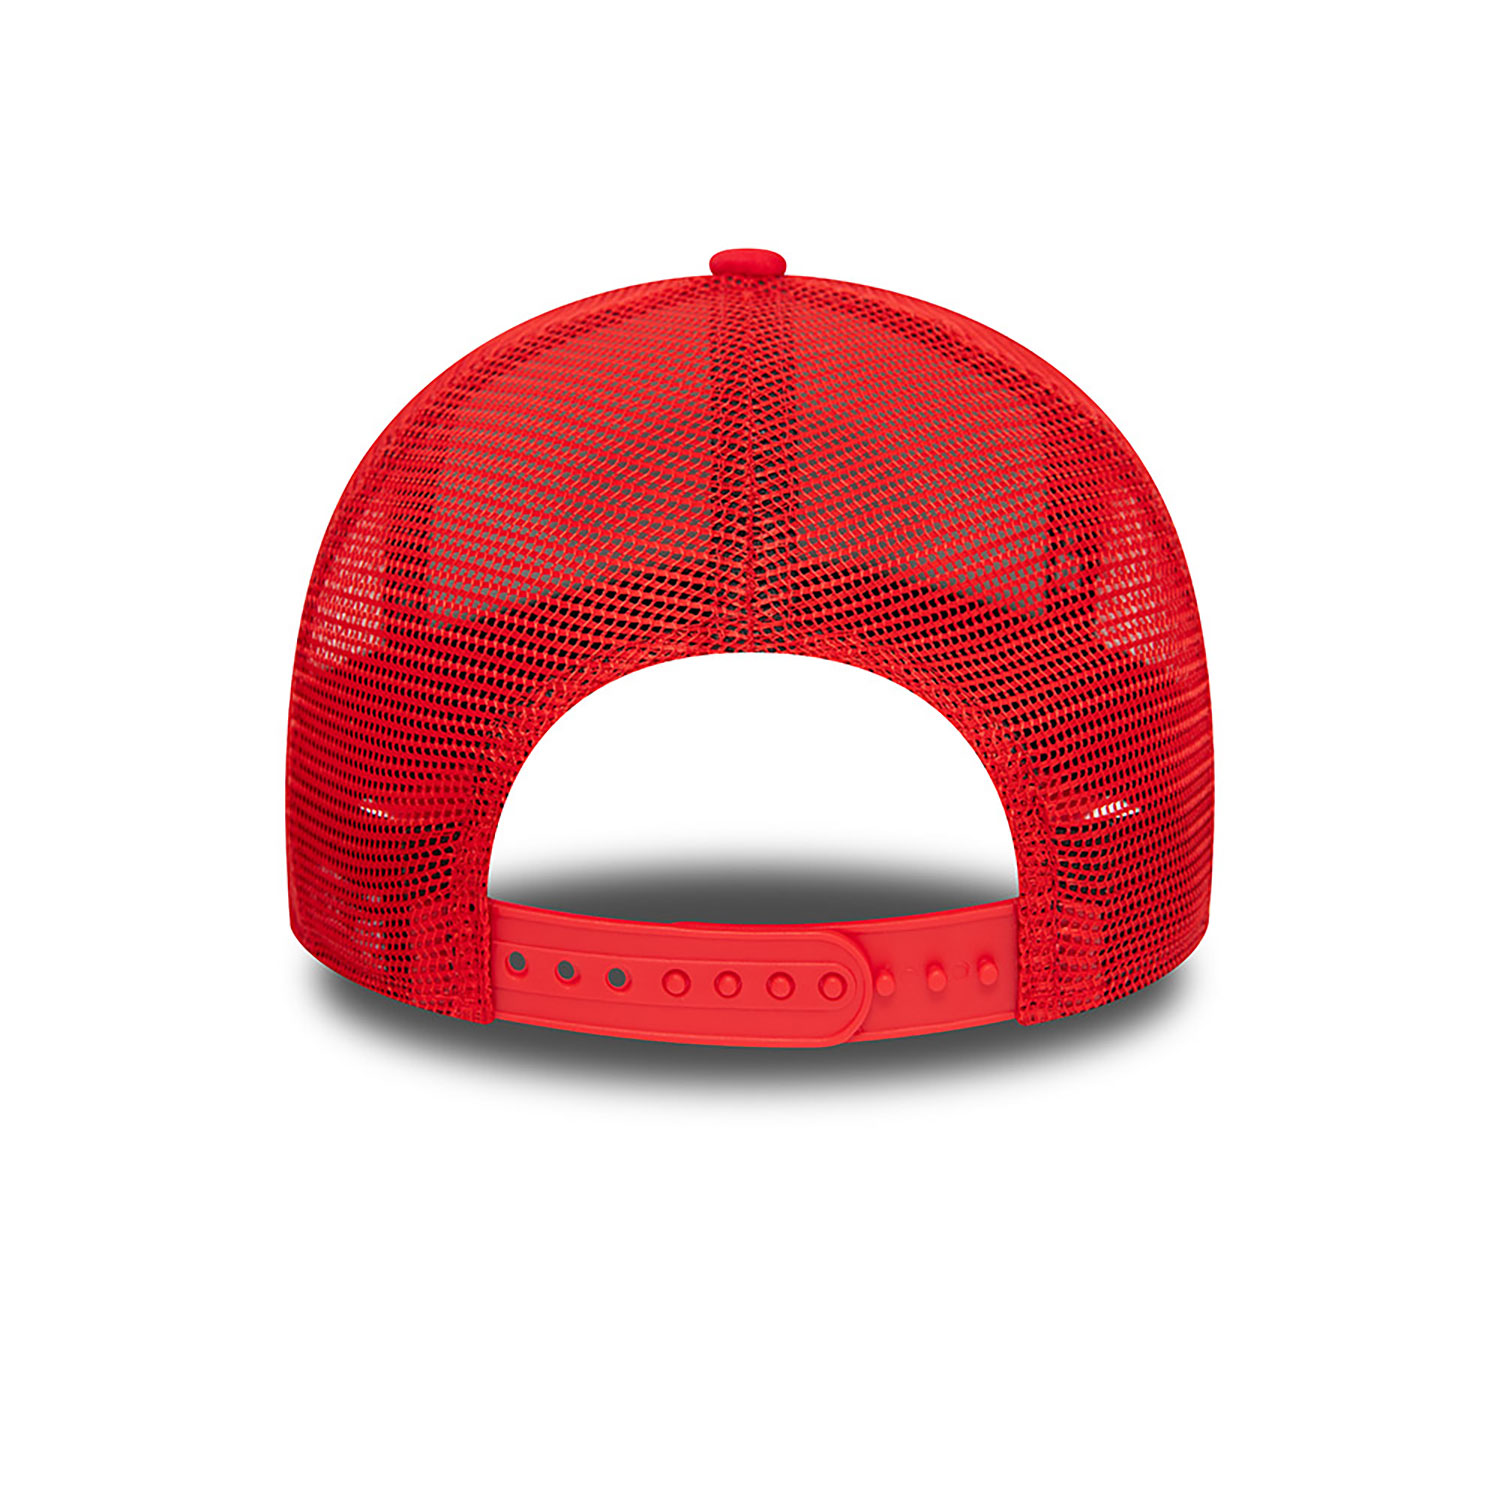 New Era Oval Red Trucker Cap